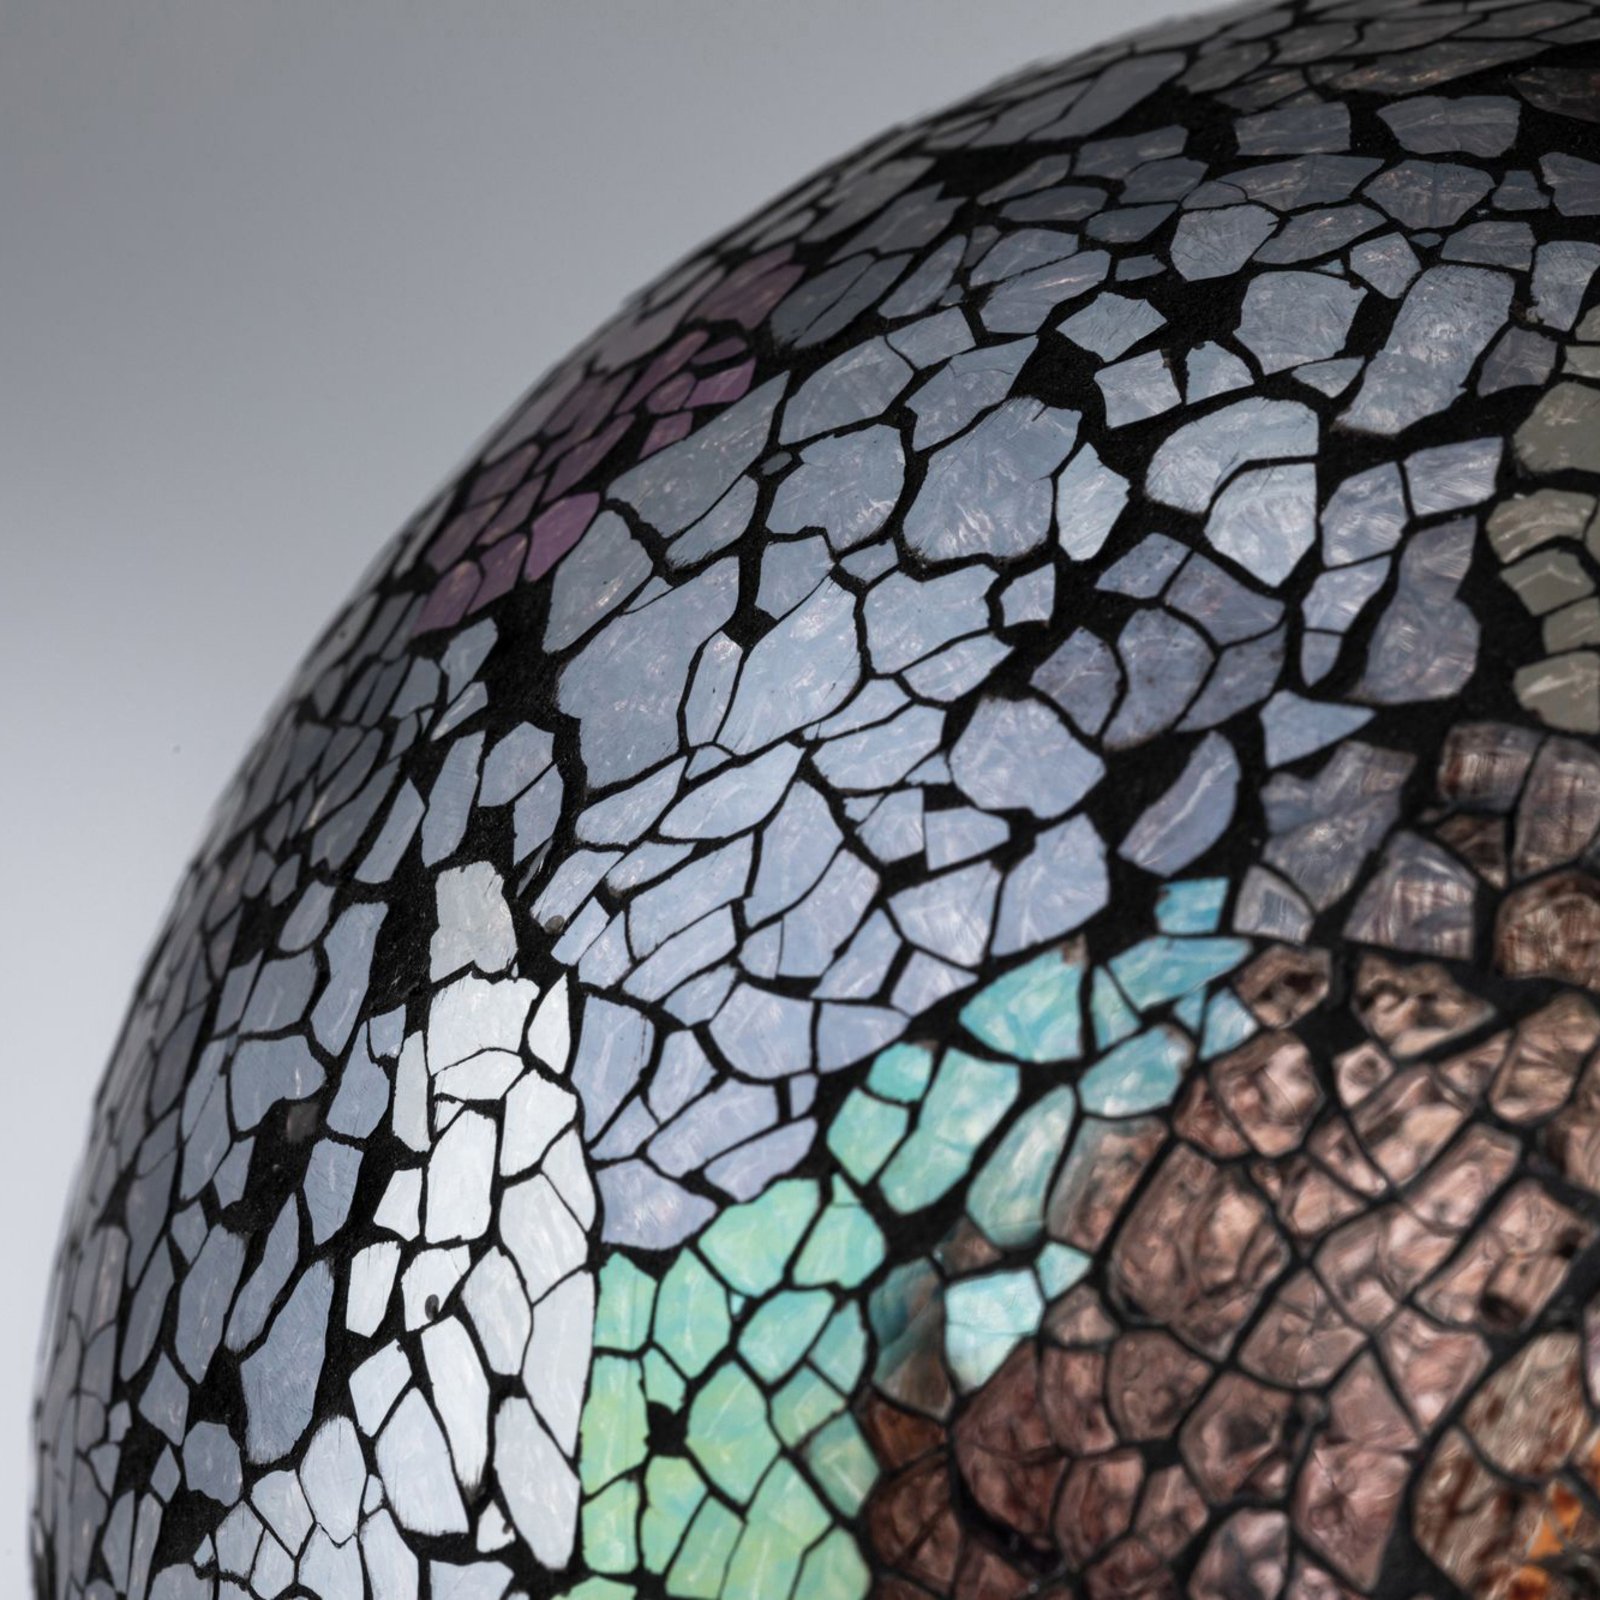 Paulmann E27 Globe LED 5W Miracle Mosaic czarny